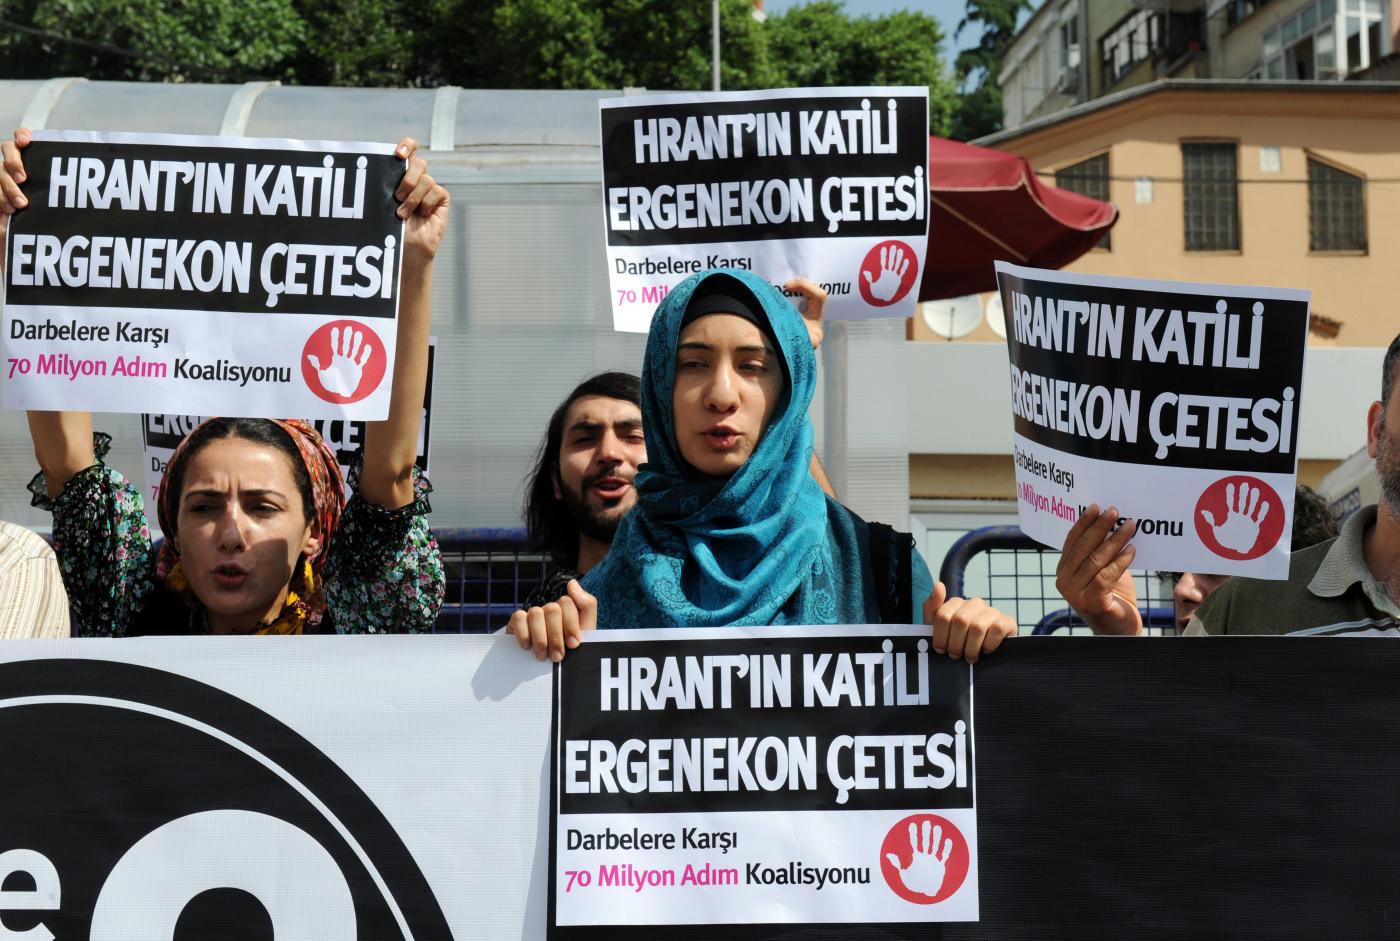 Ergenekon: The bizarre case that shaped modern Turkey 6